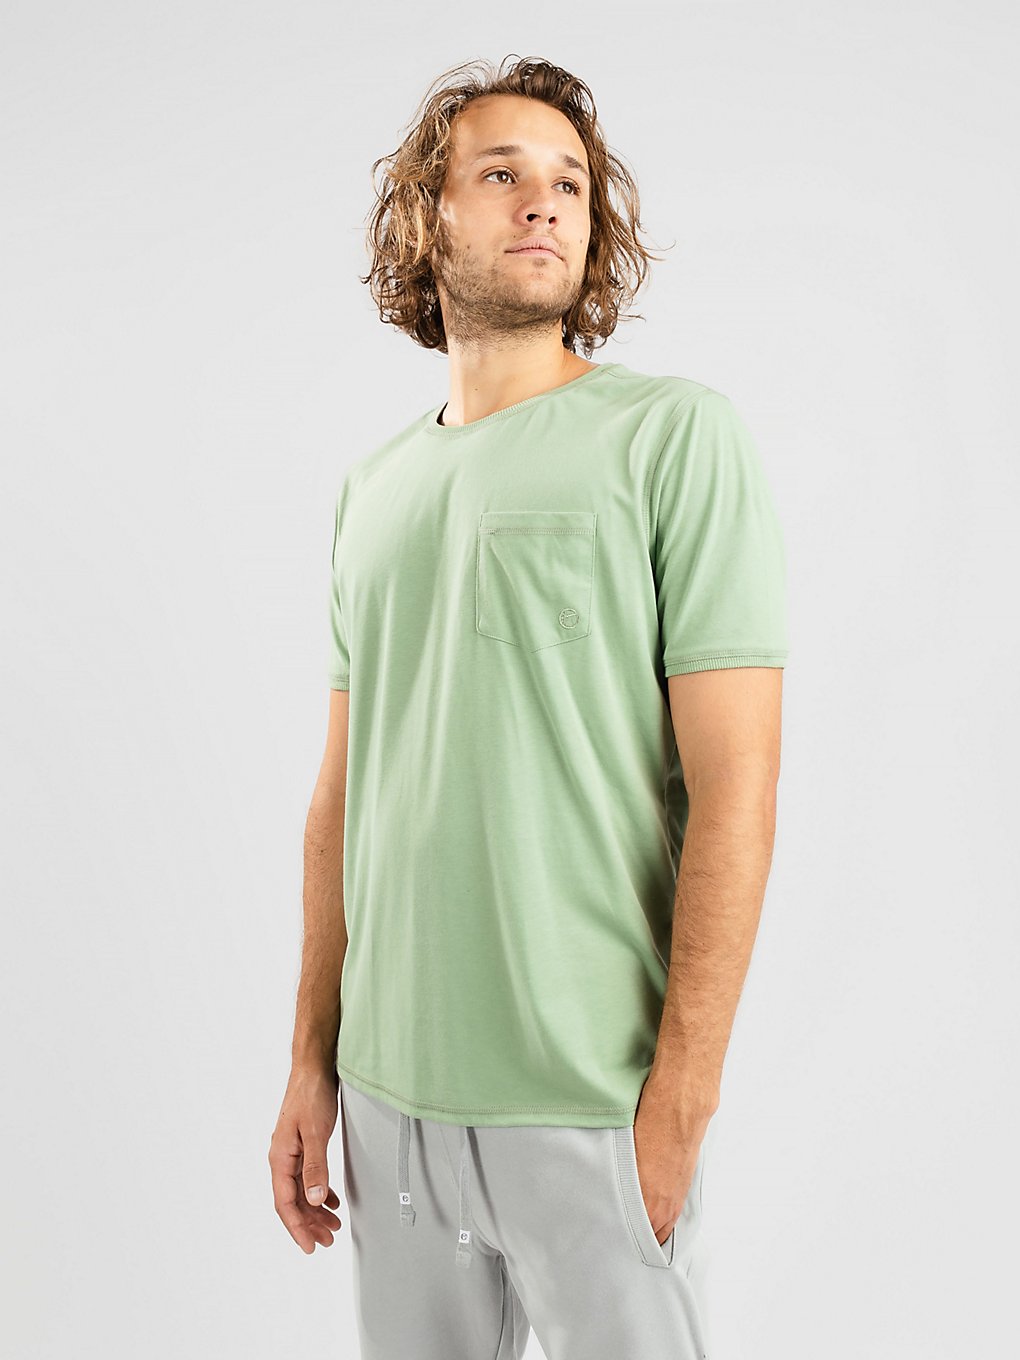 Kazane Moss T-Shirt basil kaufen